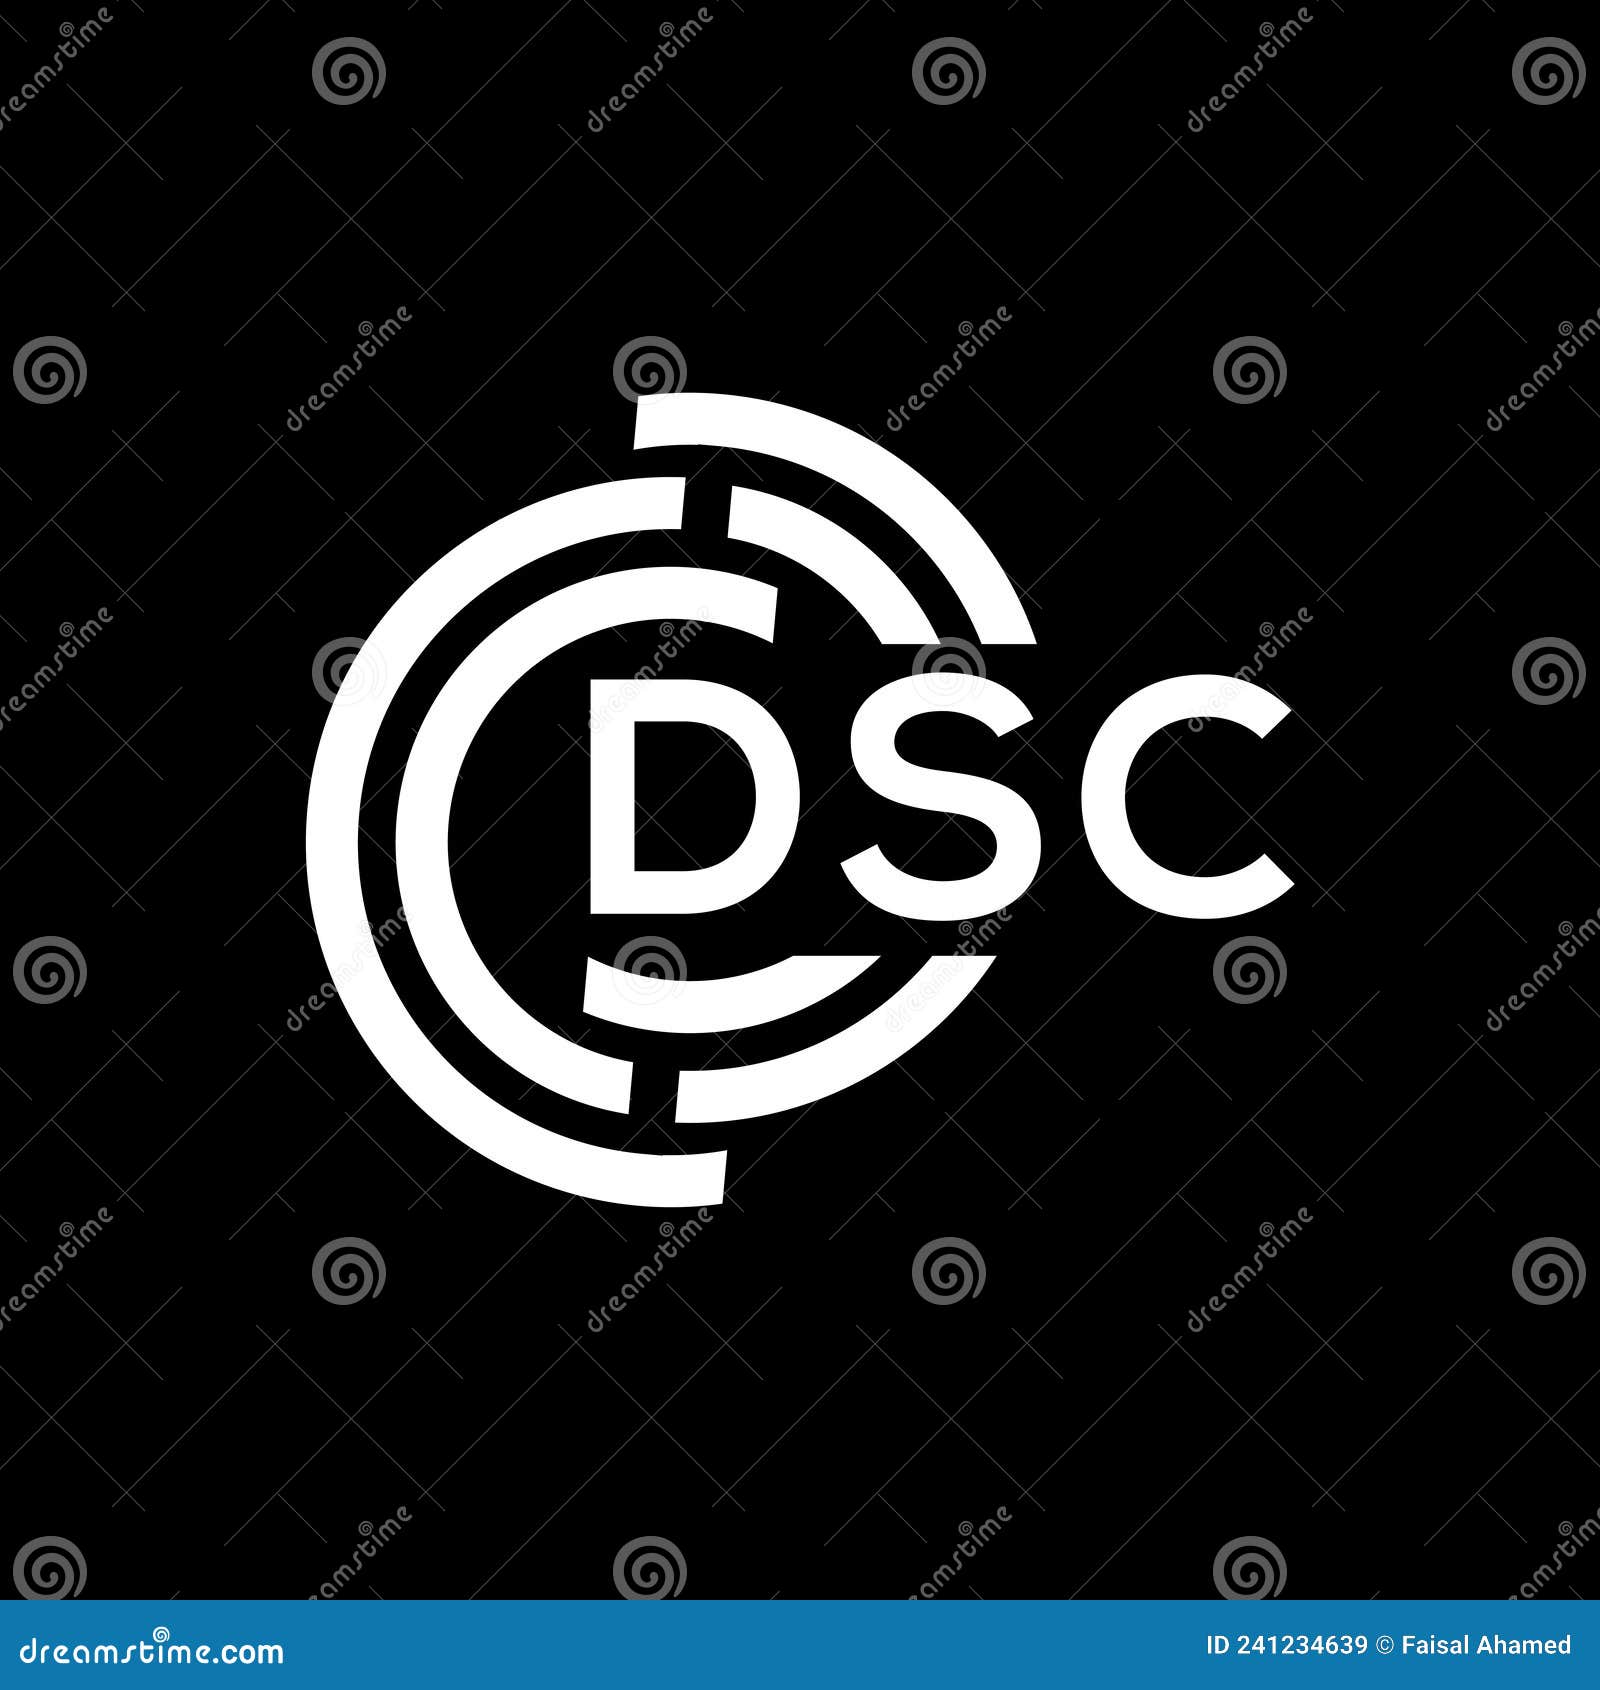 printdsc letter logo  on black background. dsc creative initials letter logo concept. dsc letter 